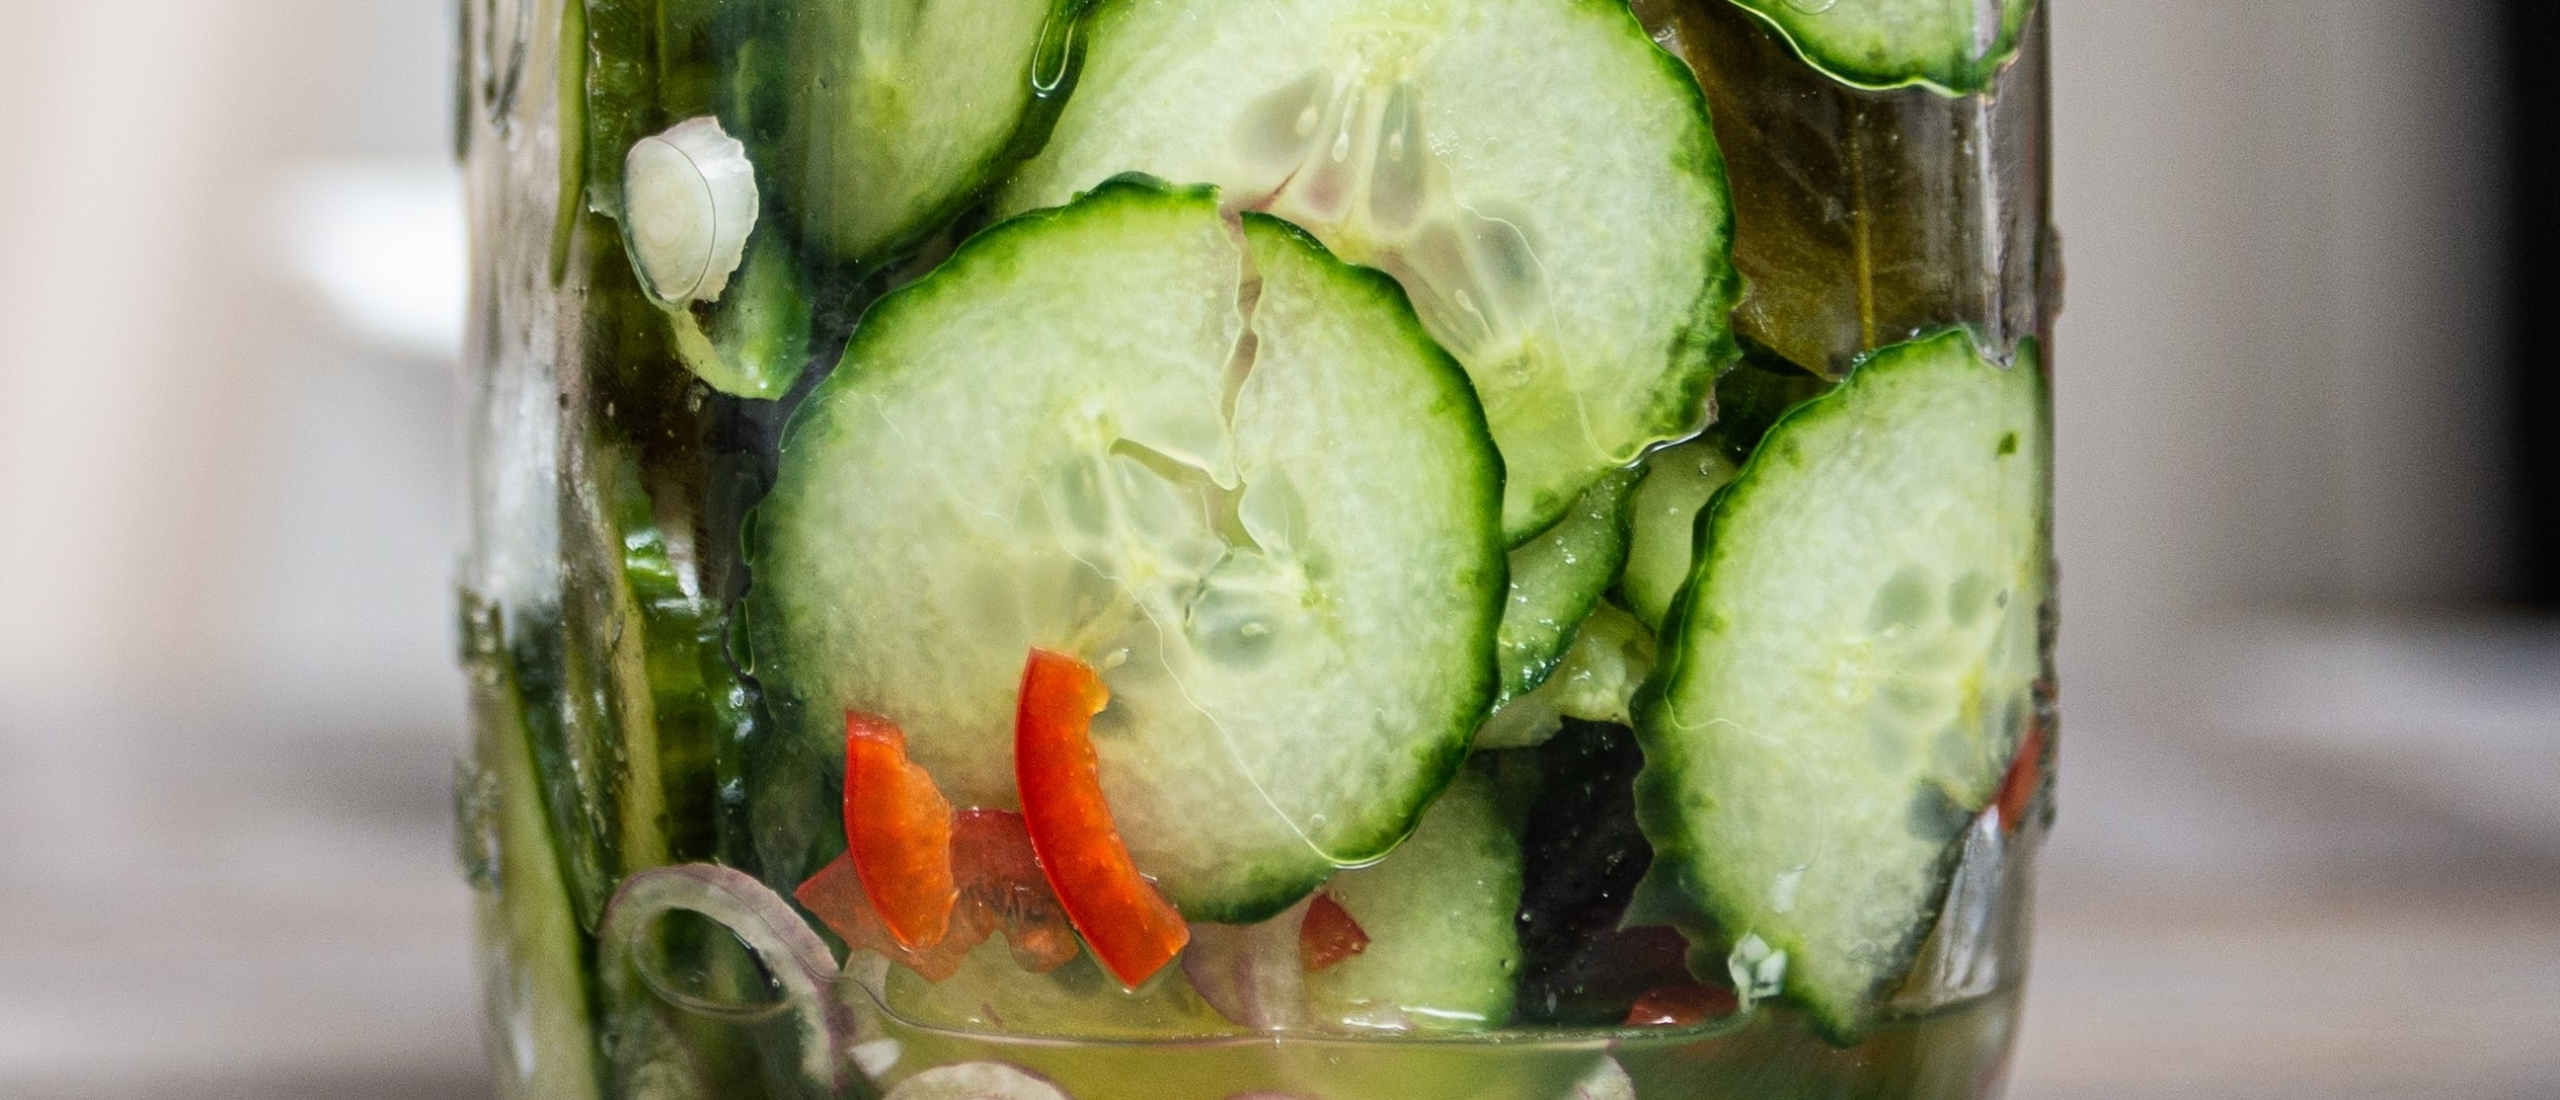 Atjar Ketimoen recept (Indonesische ingelegde komkommer)